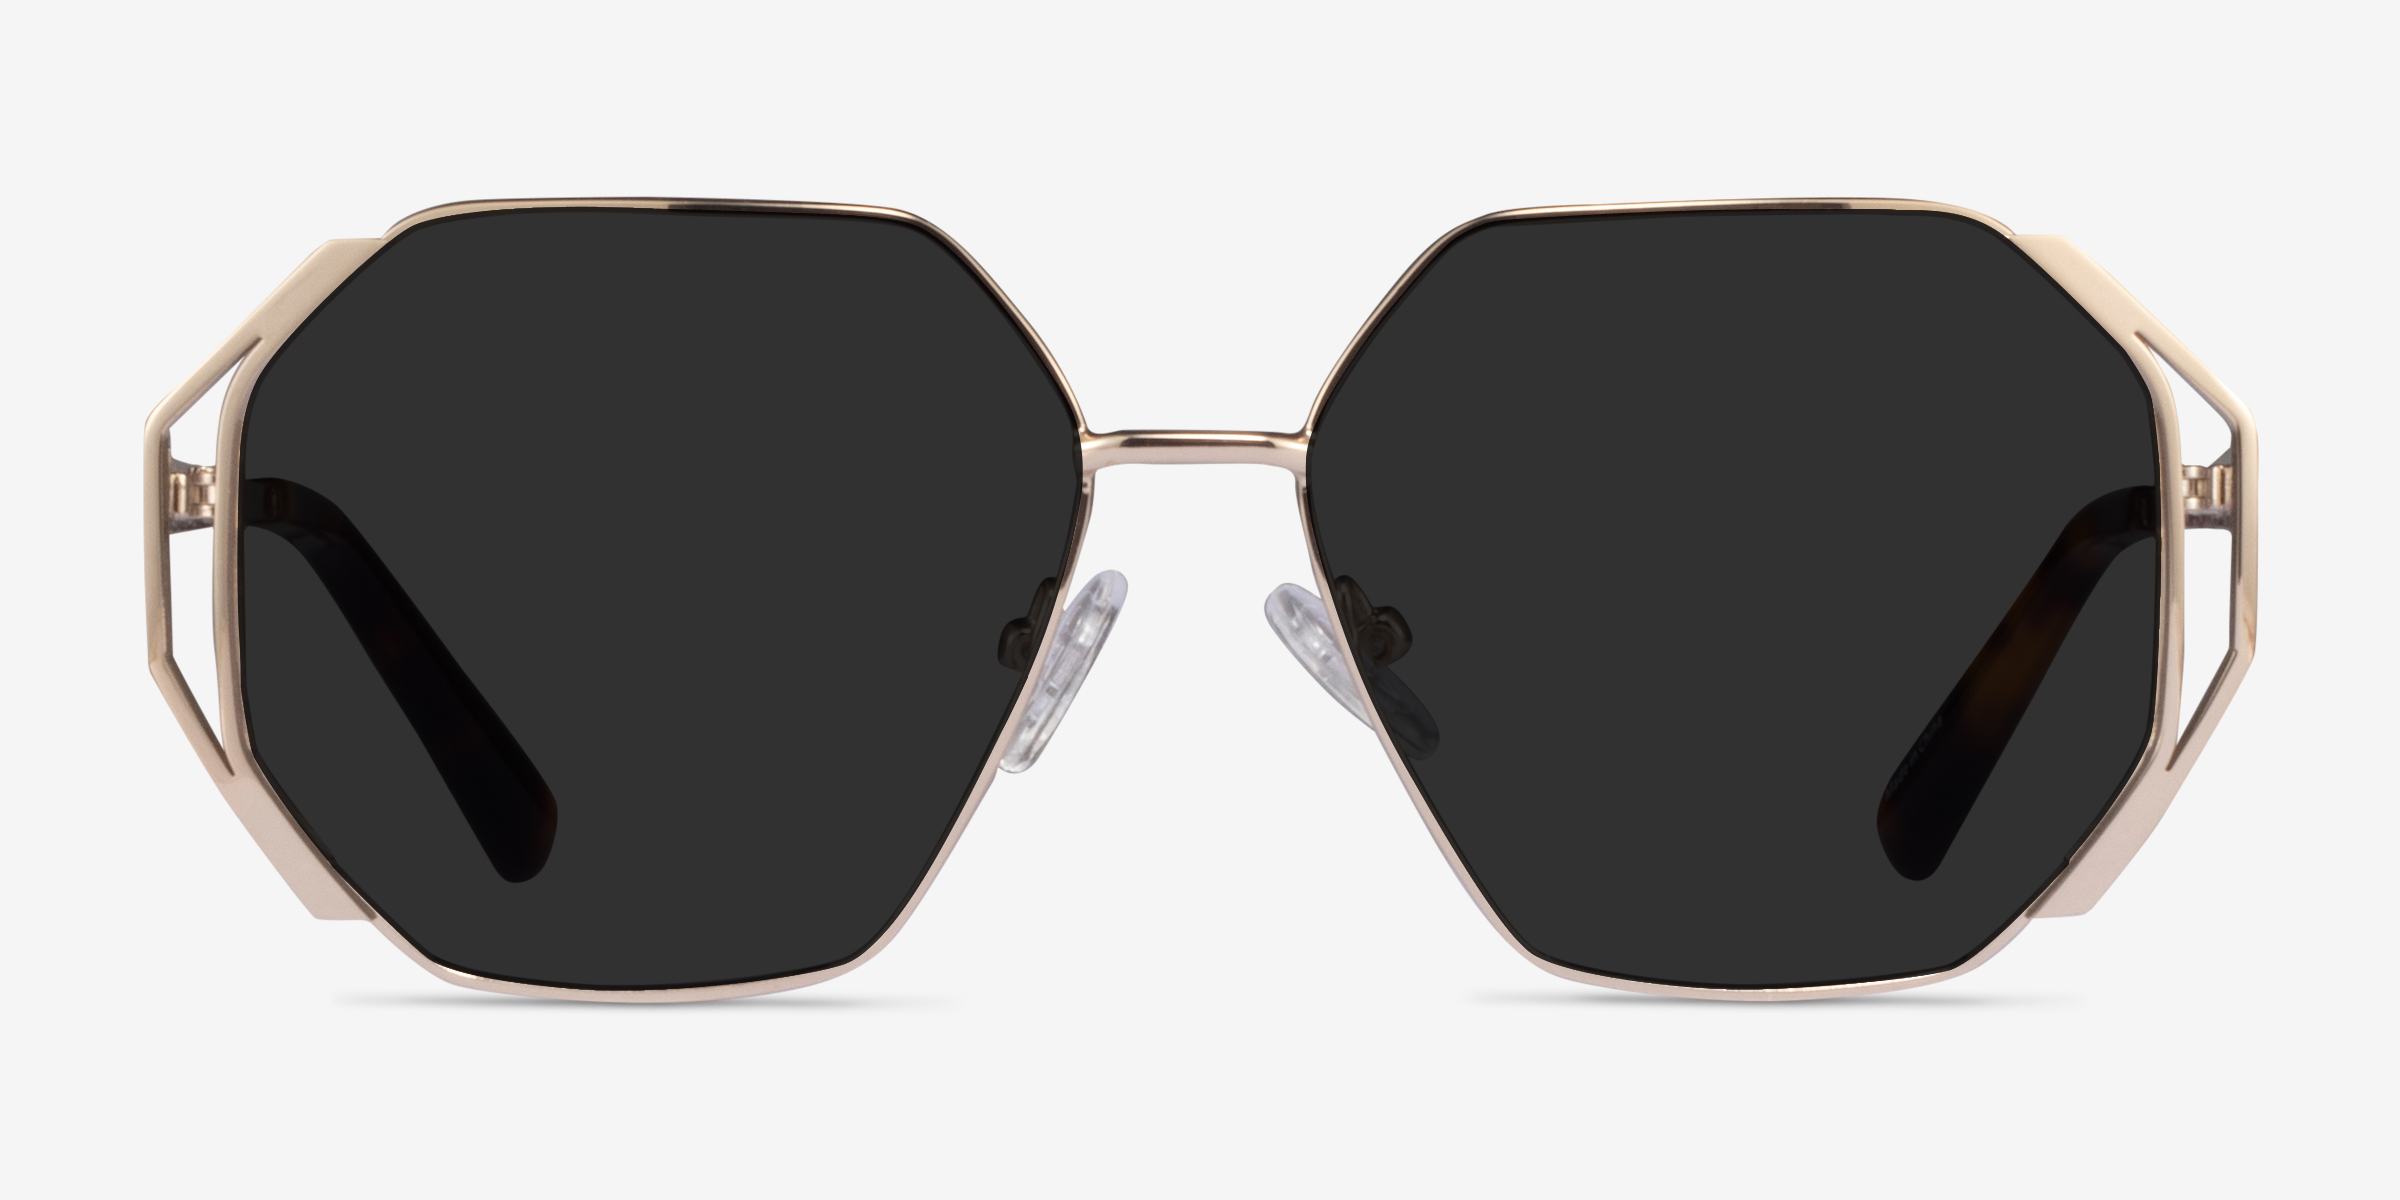 Obscura - Geometric Gold Frame Sunglasses For Women | Eyebuydirect